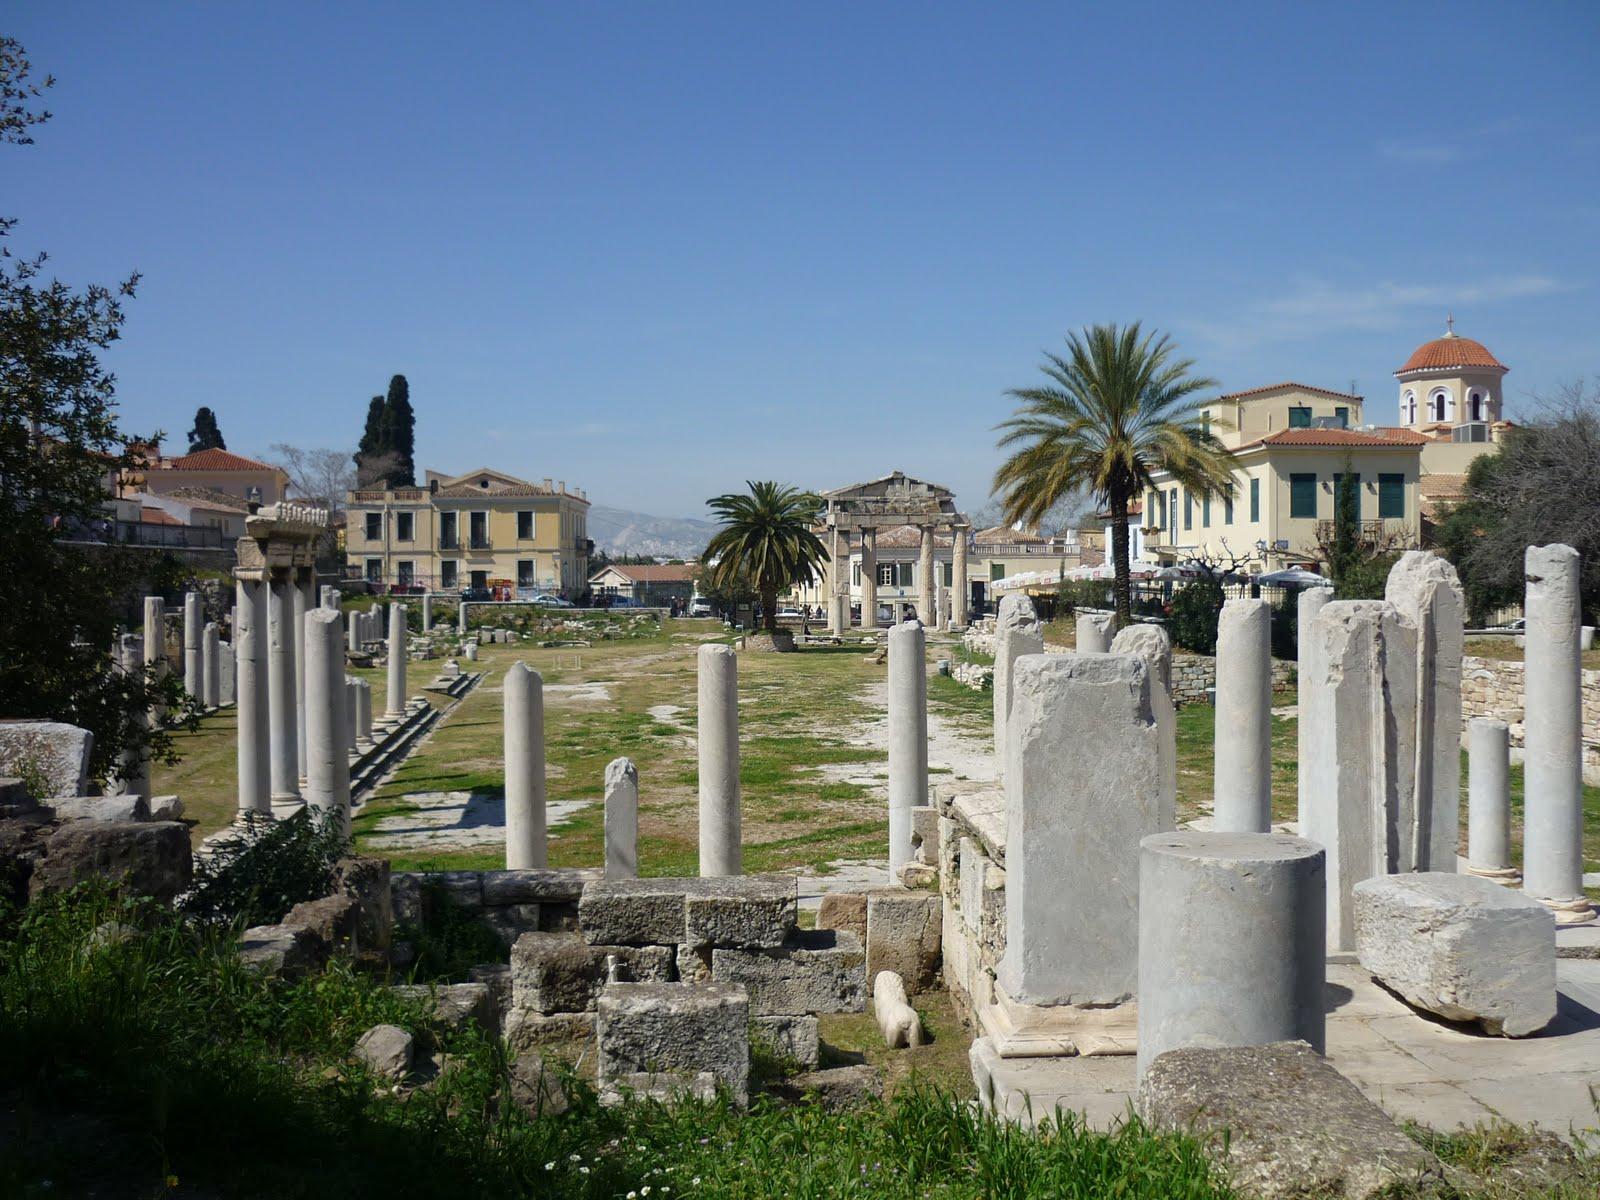 Remains of the Roman Agora